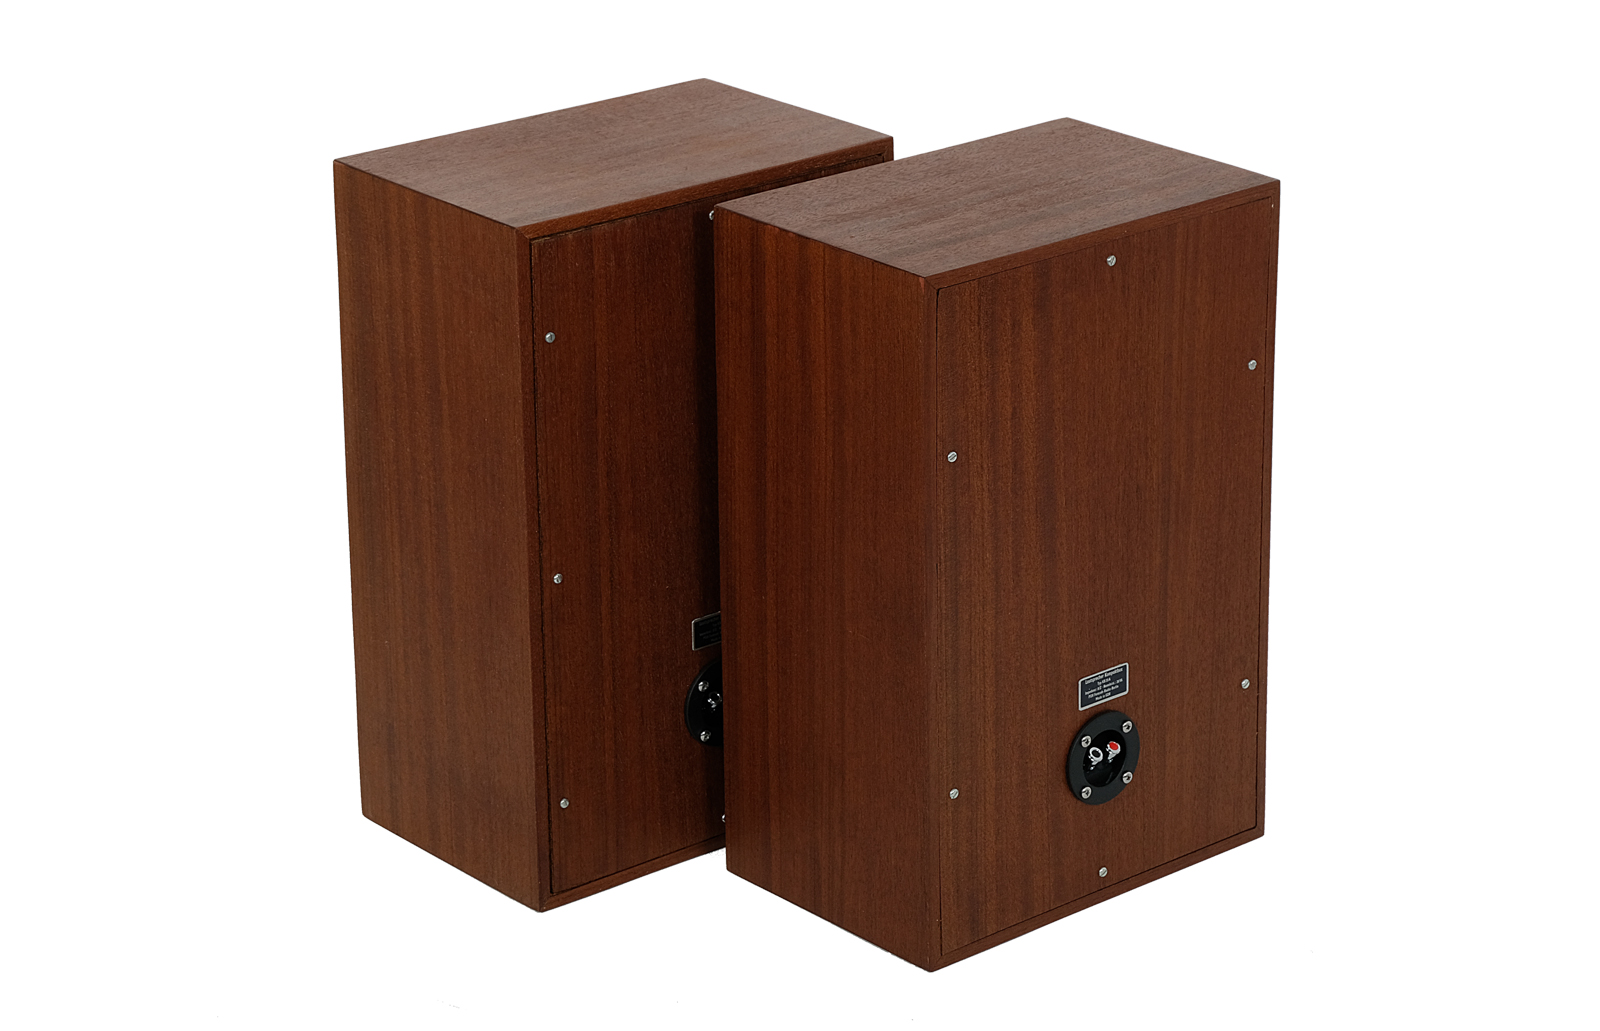 PGH Kompaktbox KB35A speakers